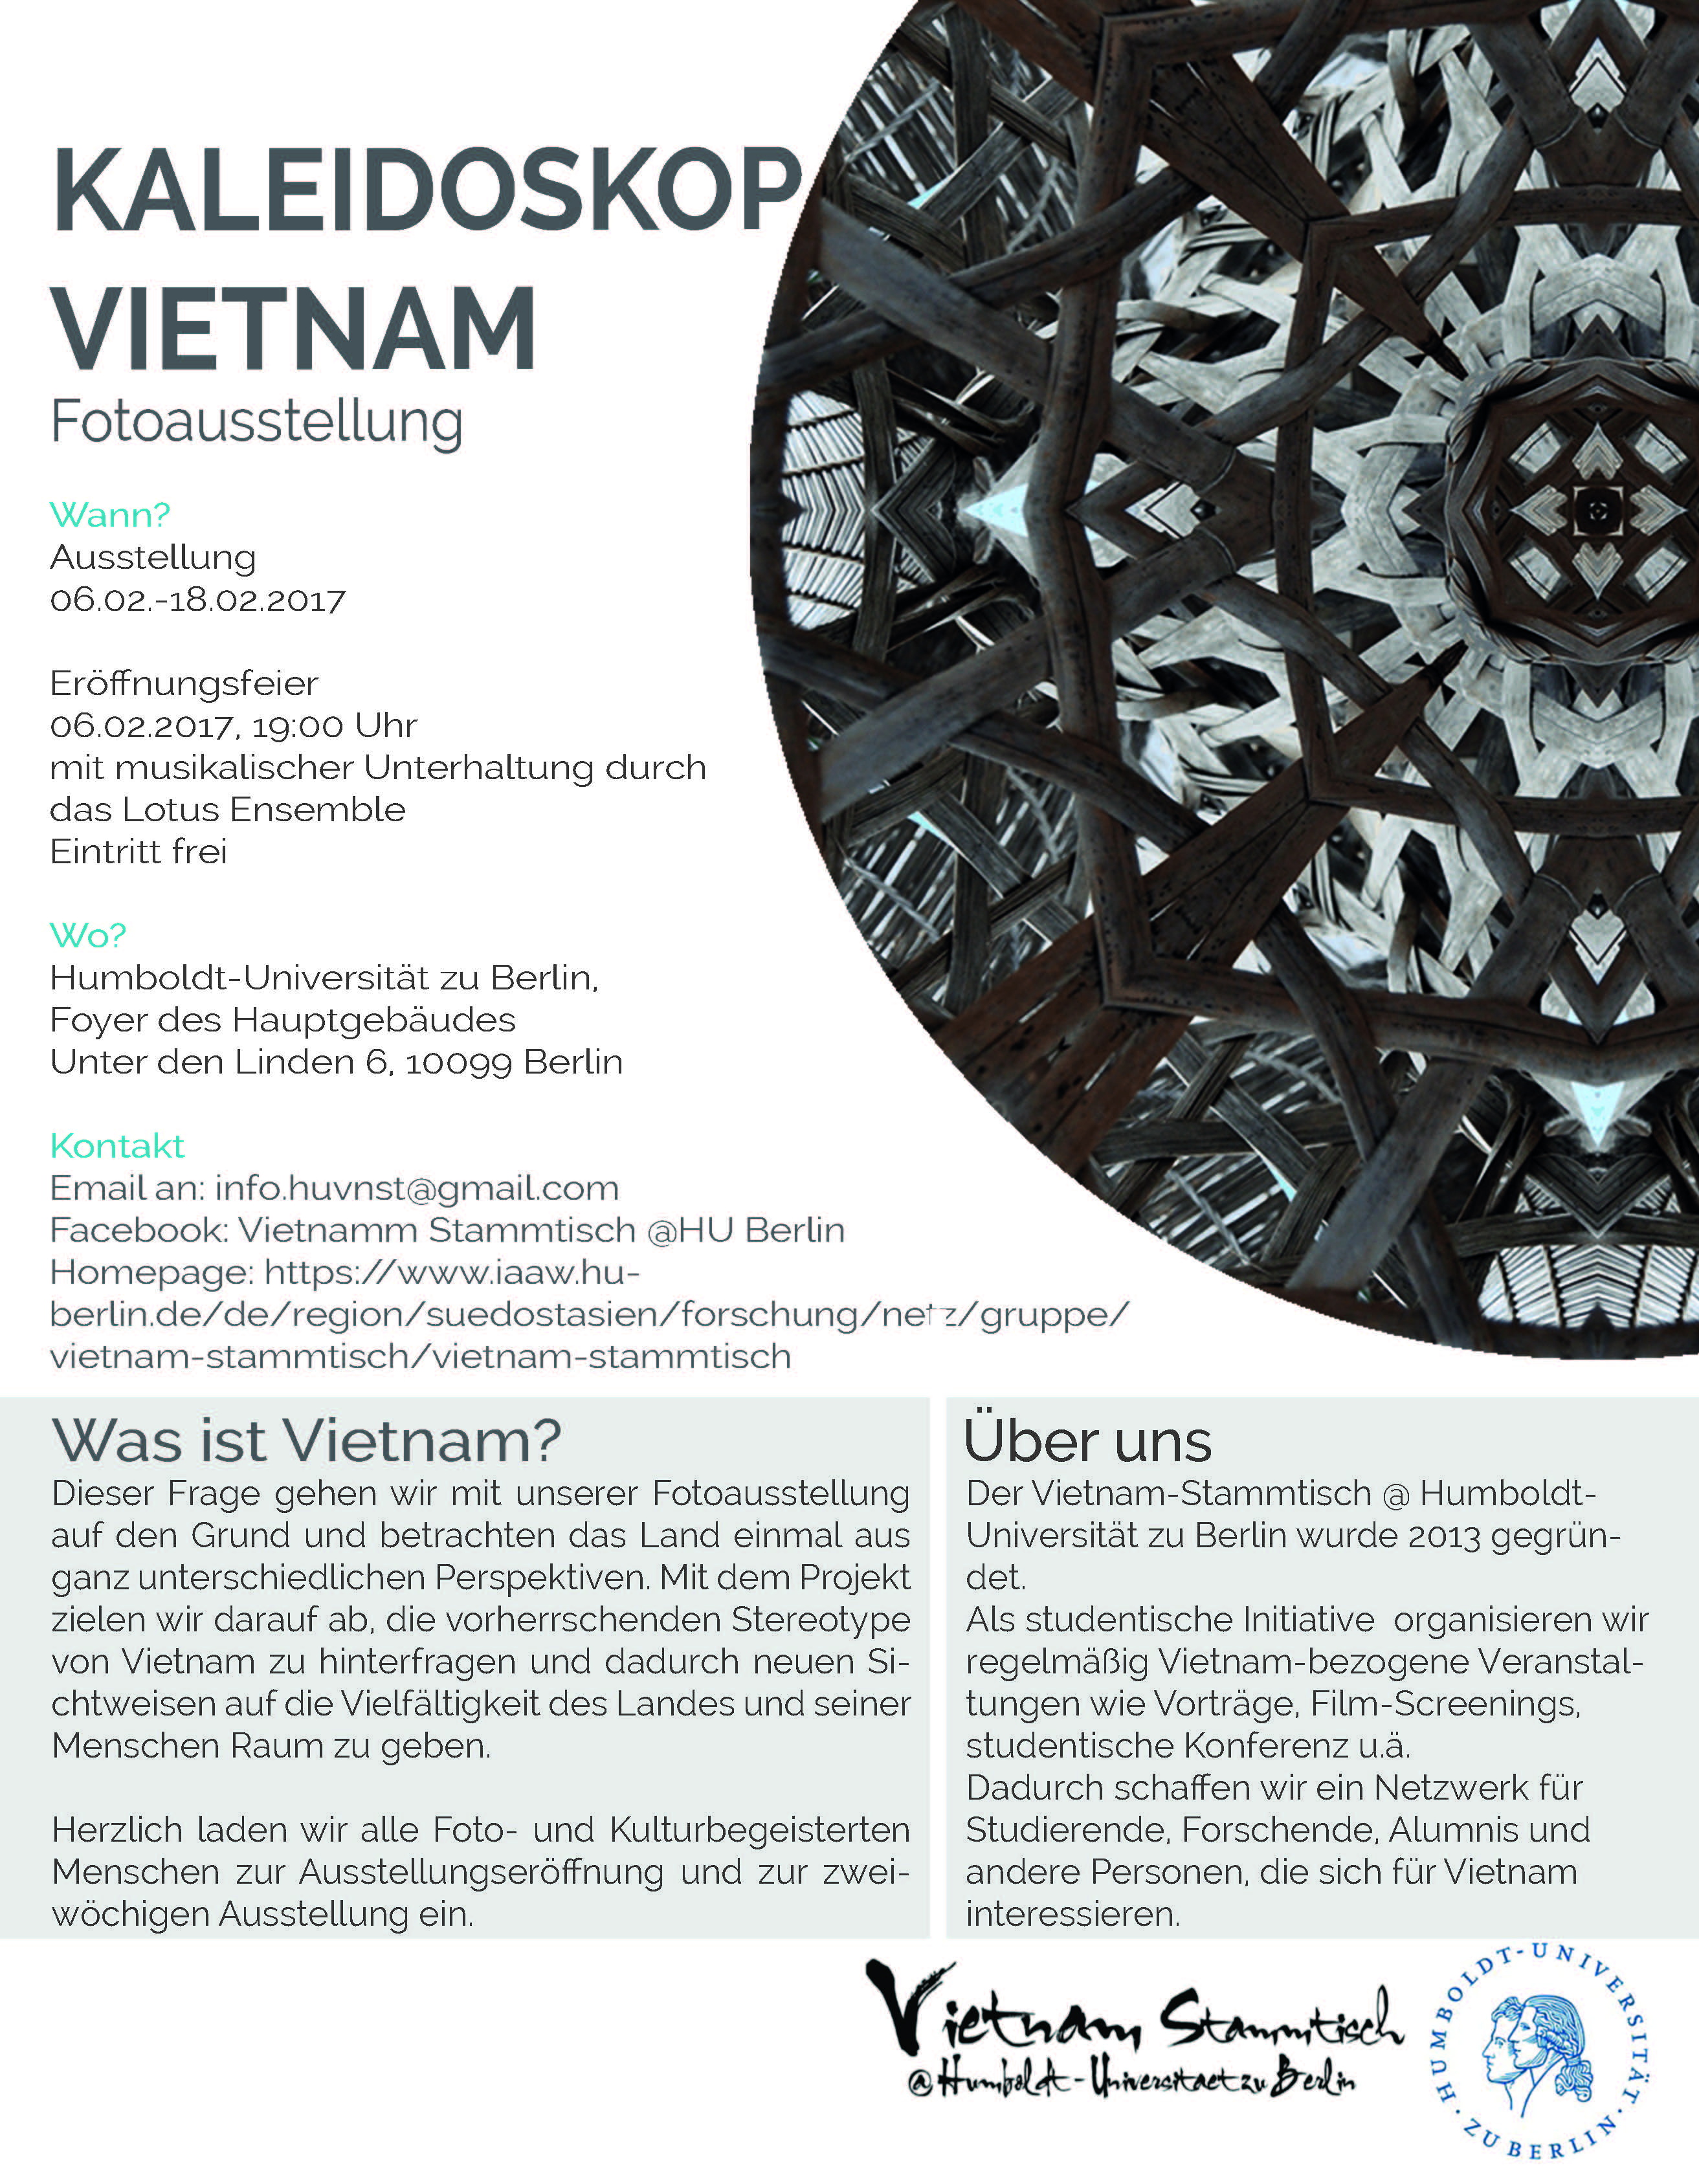 Fotoaustellung Kaleidoskop Vietnam